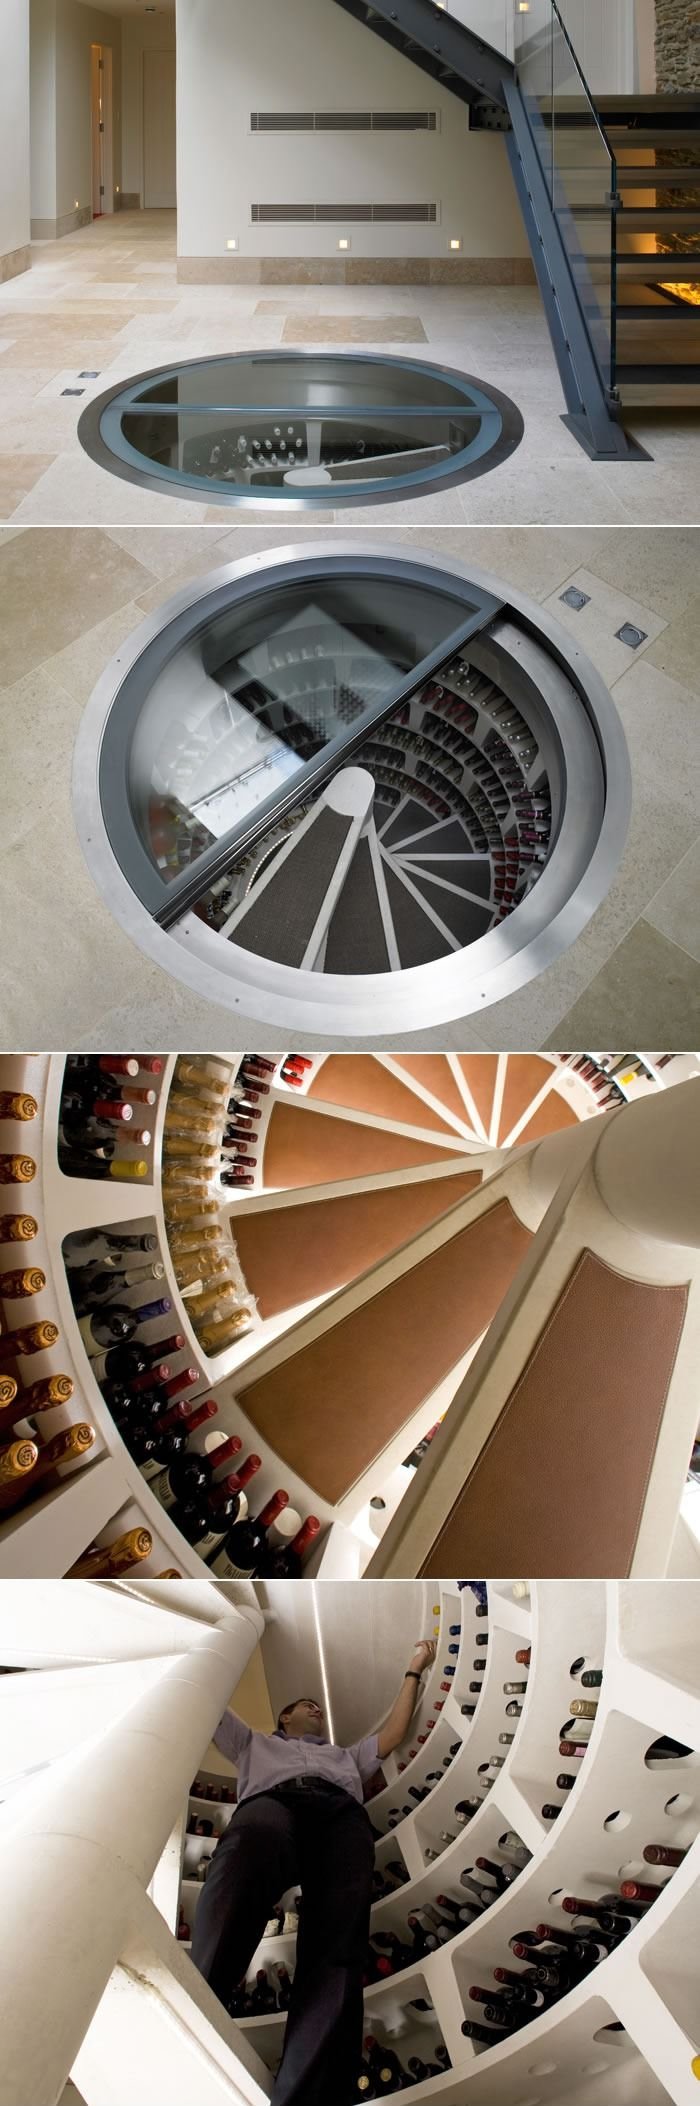 Spiral Wine Cellar is cool.